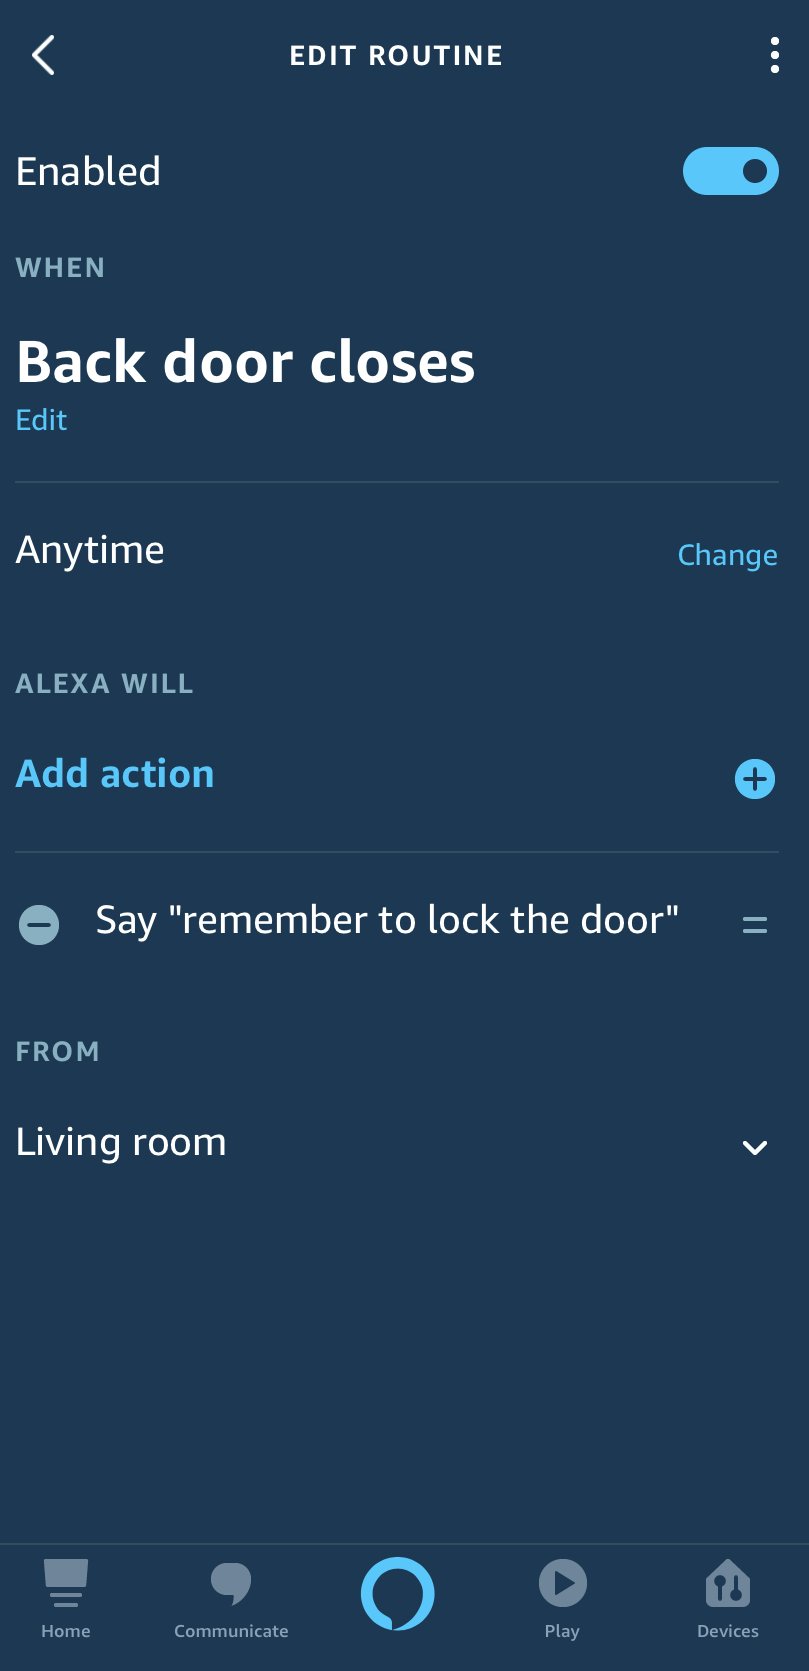 Lifeshield Alexa App routine